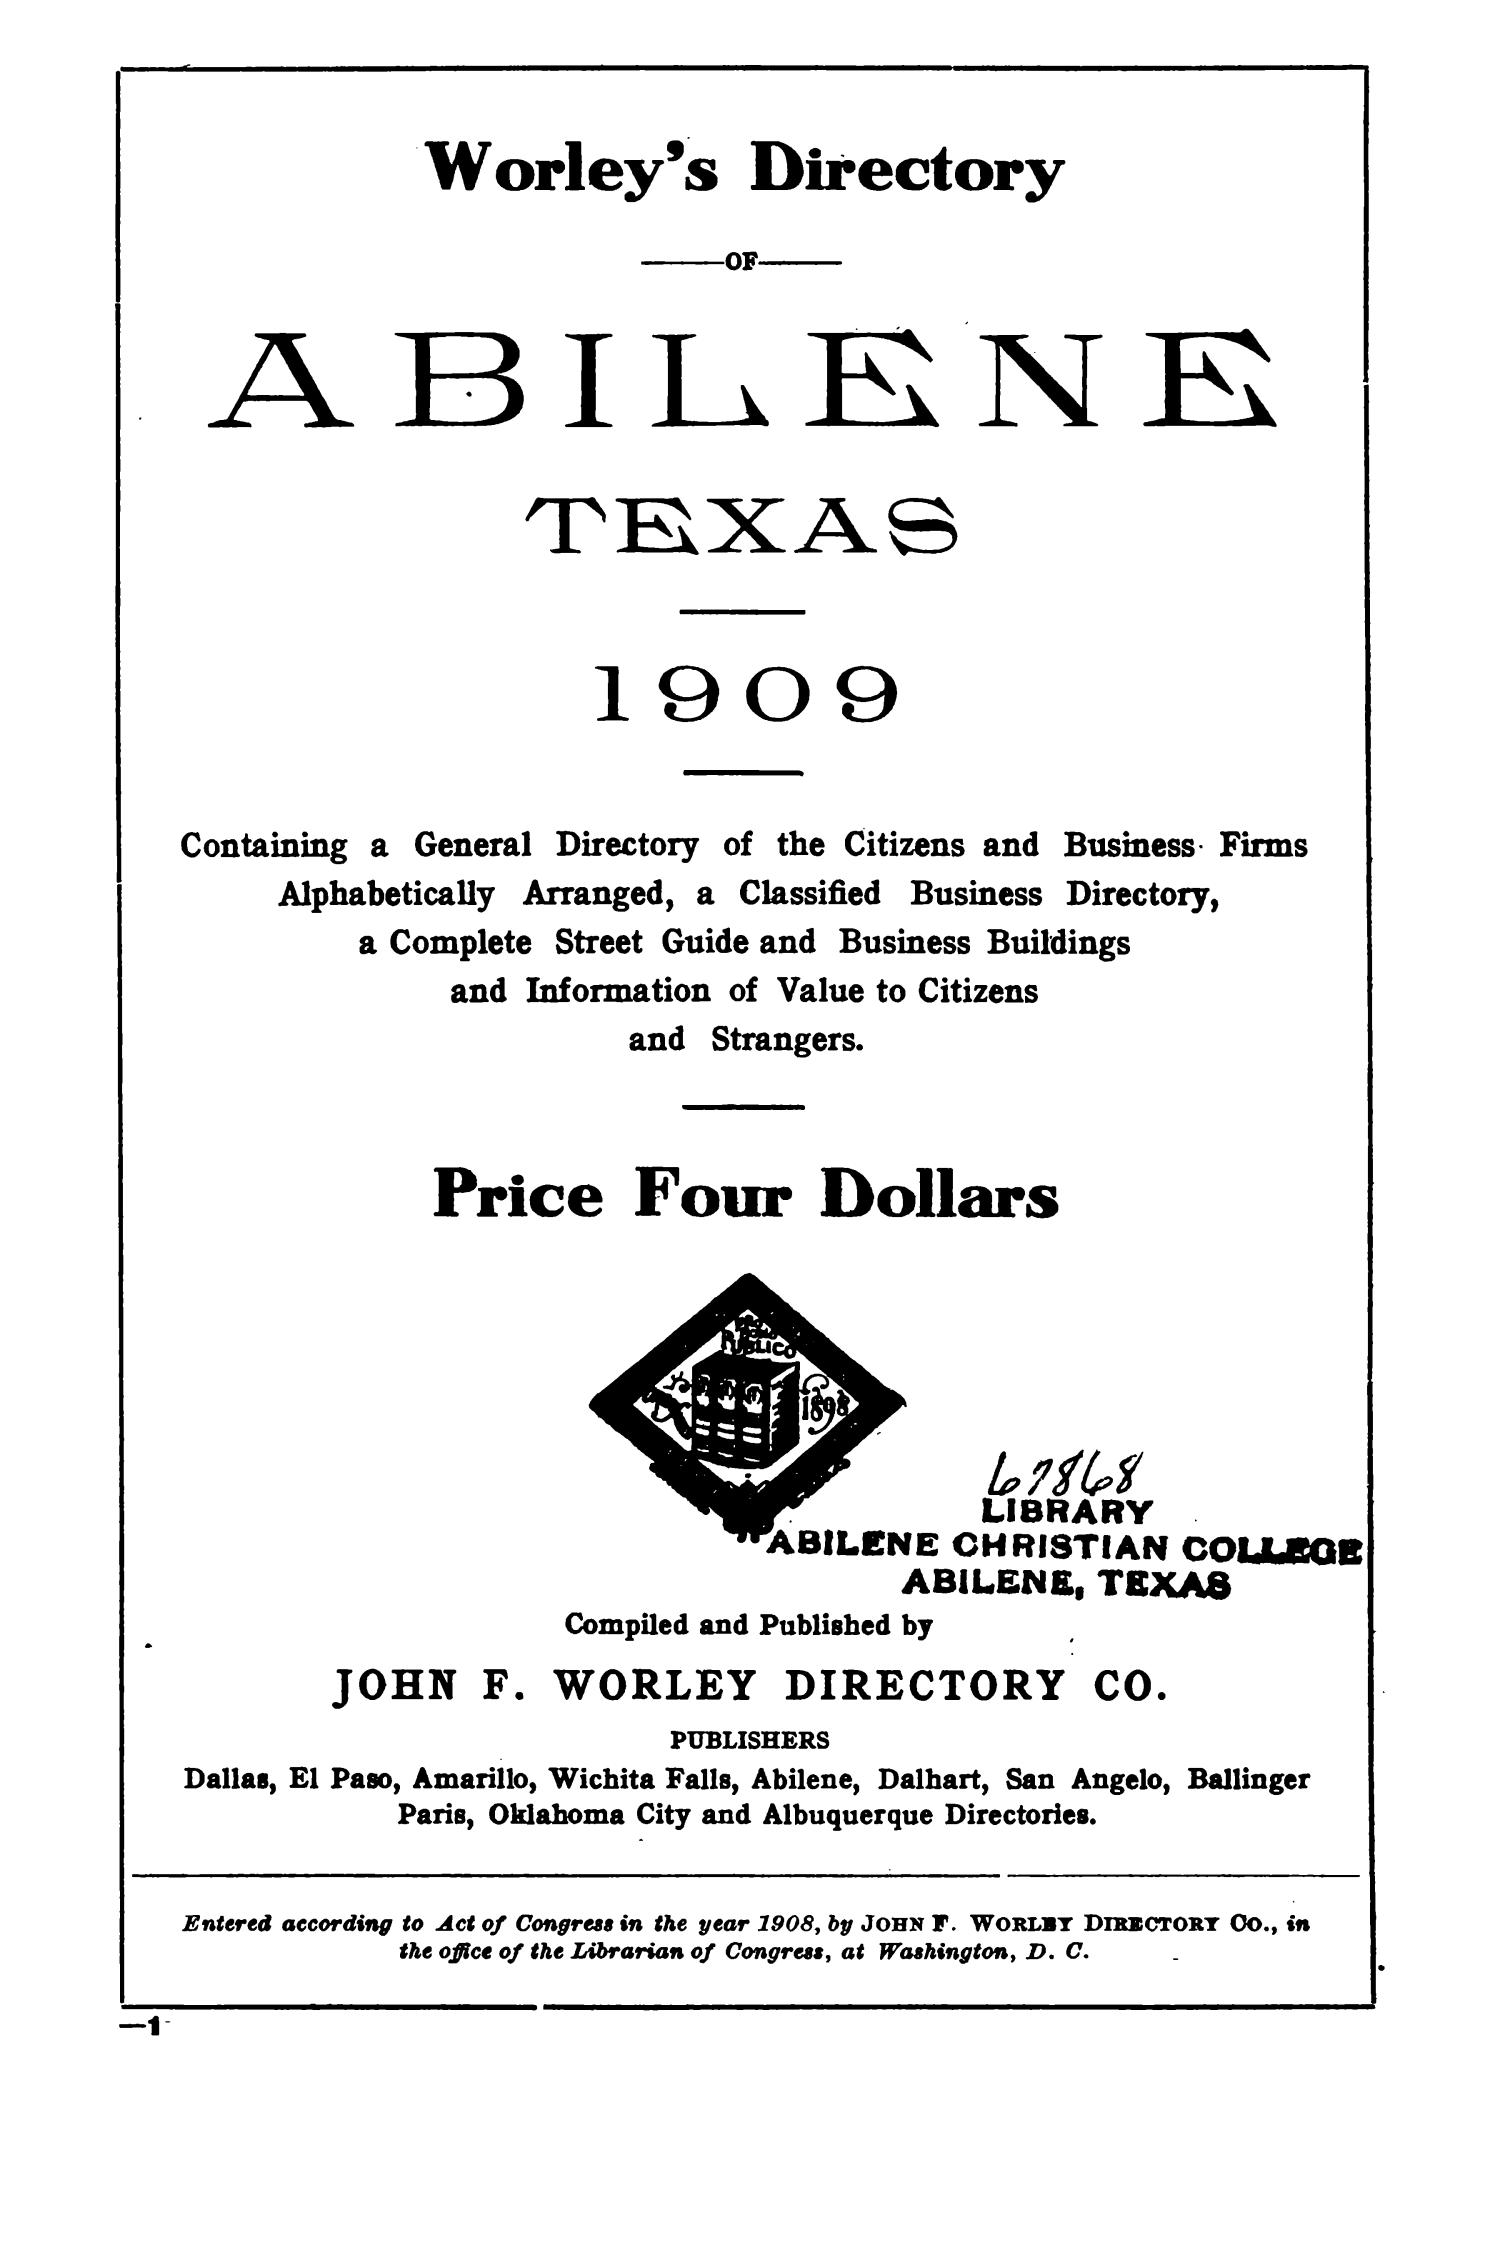 Worely's Directory of Abilene, Texas, 1909
                                                
                                                    1
                                                